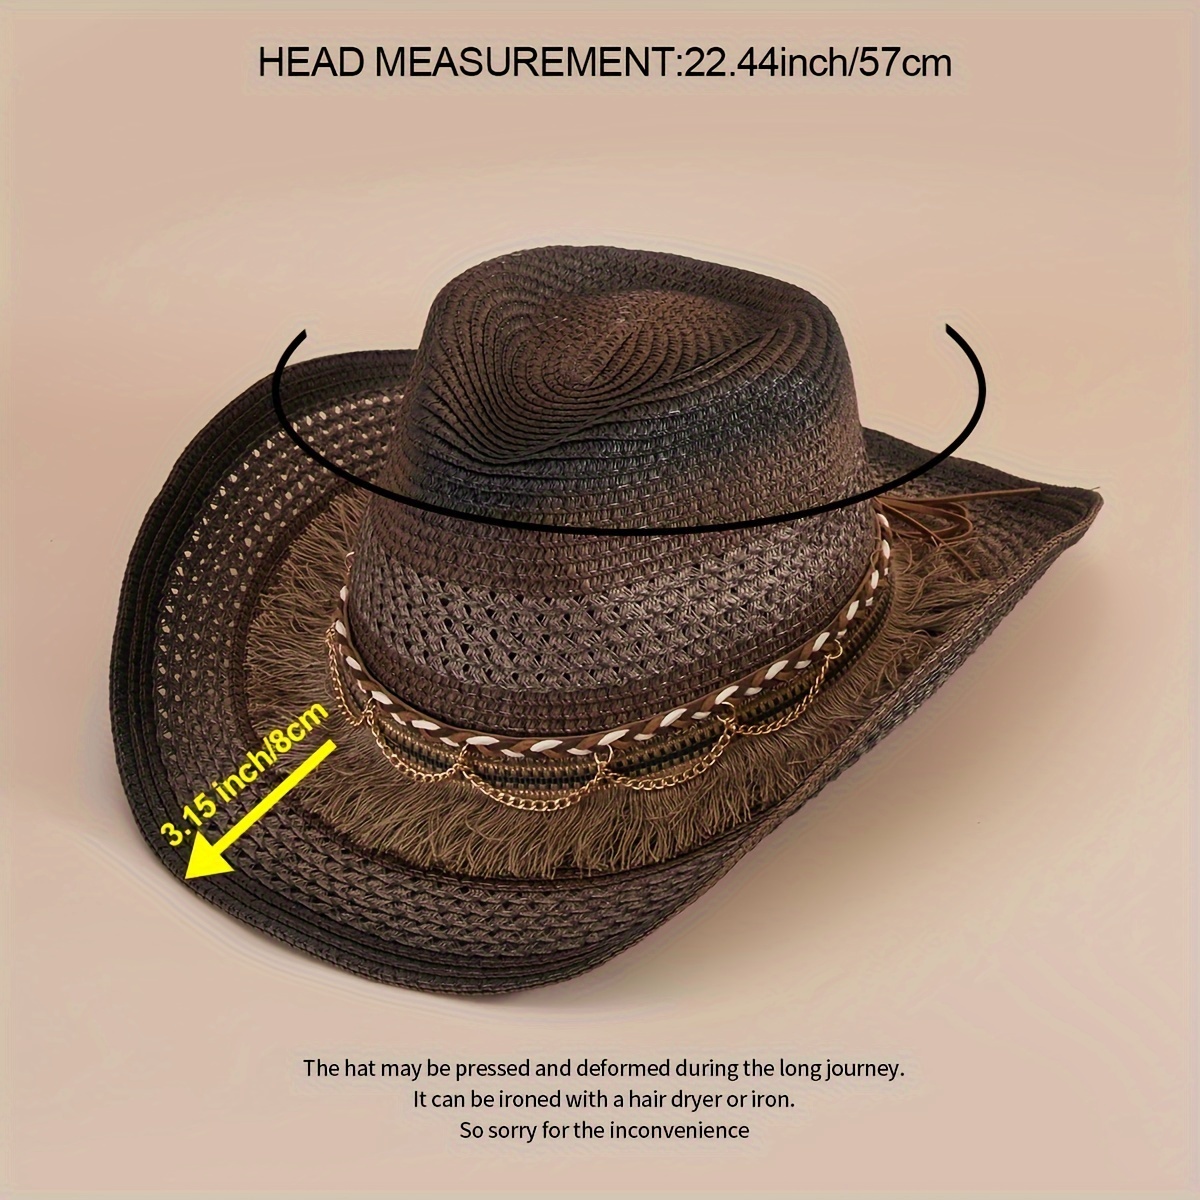 Hevirgo Cowboy Hat Classic Vintage Hollow Out unisex Curled Edge Wide Brim Men Sun Hat Fishing Hat Beige Straw, Women's, Size: One Size